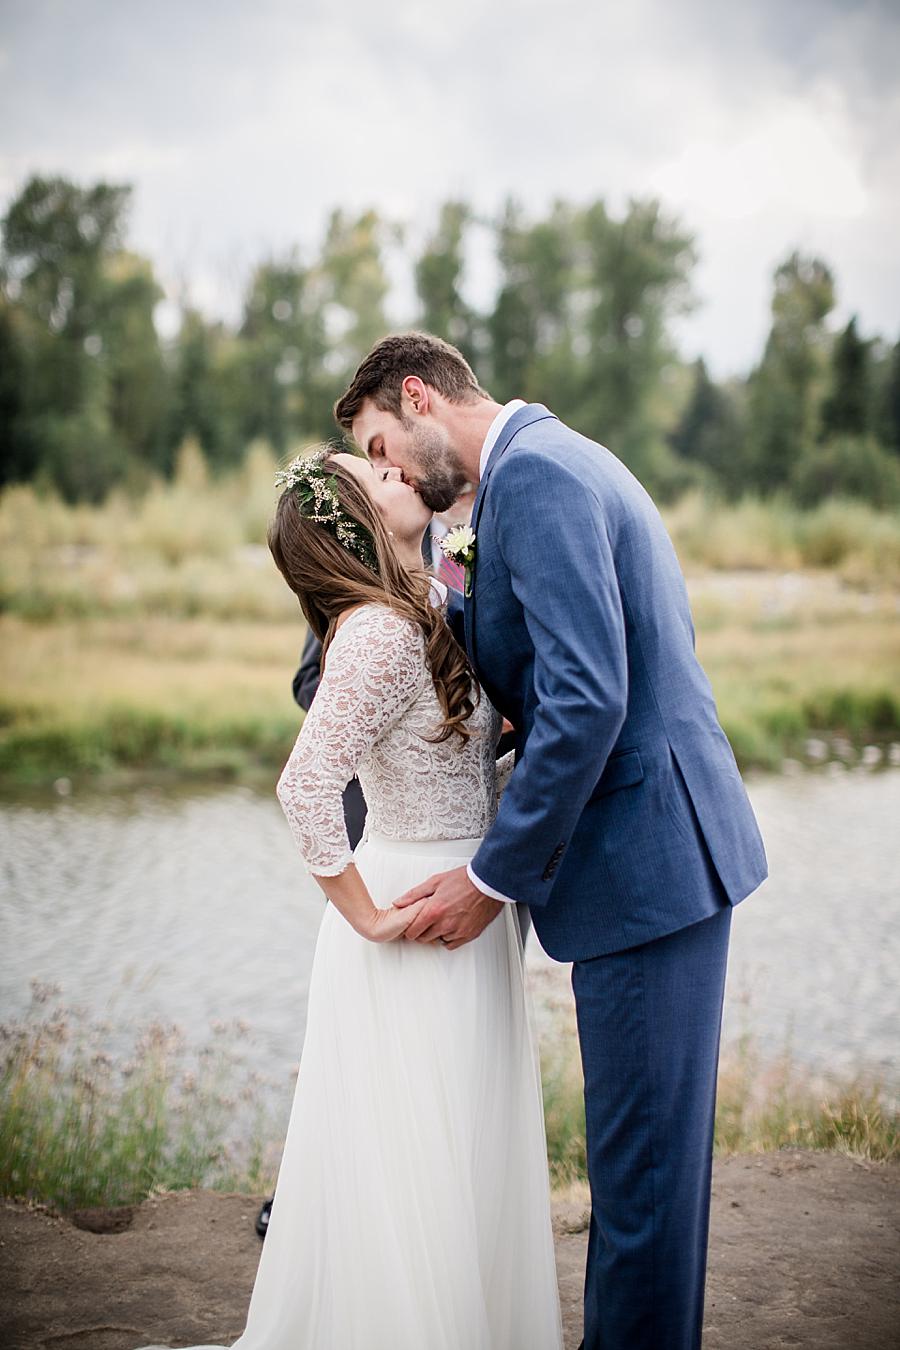 First kiss at this Grand Tetons Destination Wedding by Knoxville Wedding Photographer, Amanda May Photos.